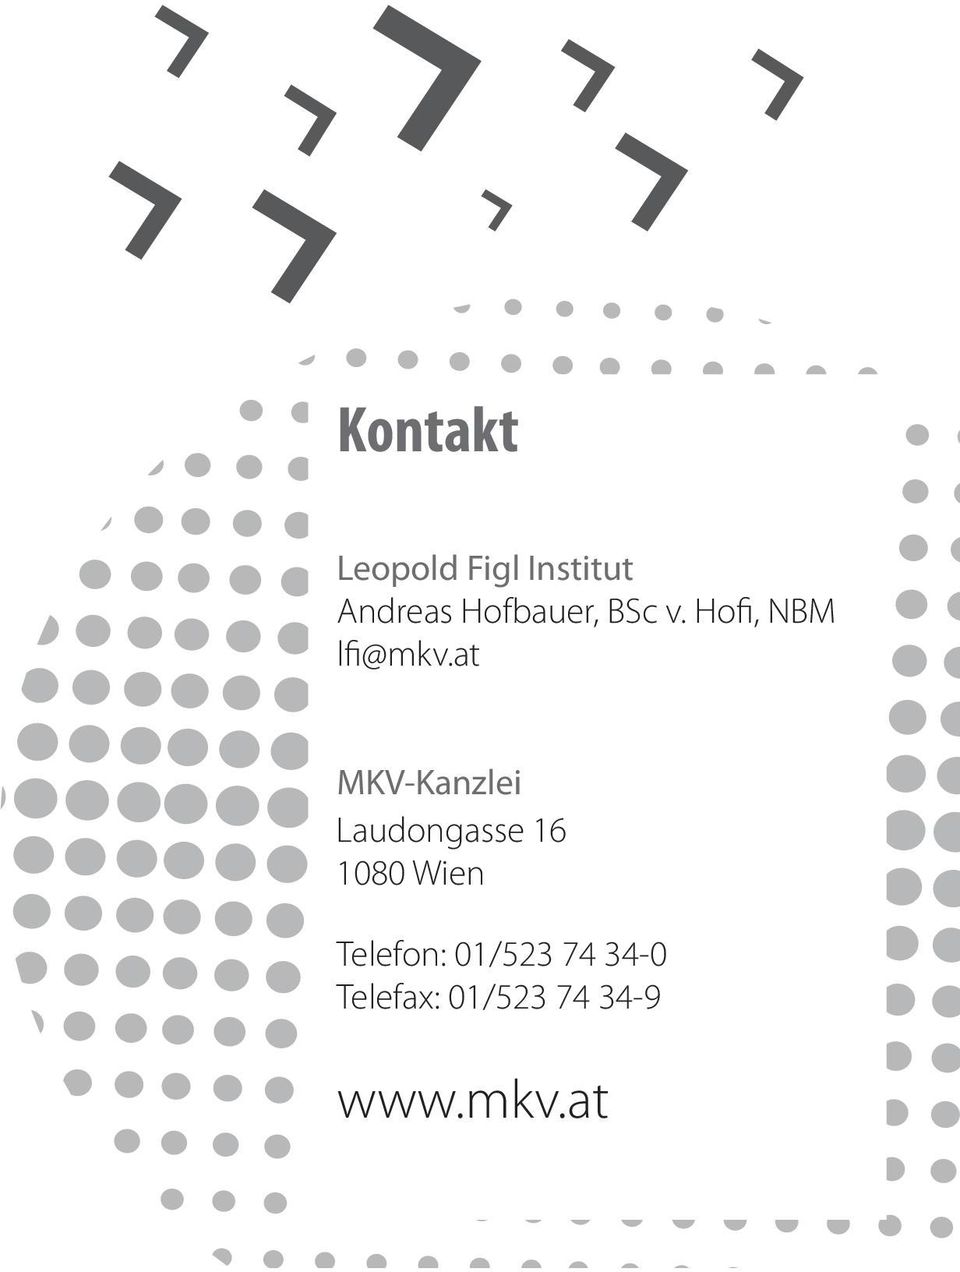 at MKV-Kanzlei Laudongasse 16 1080 Wien